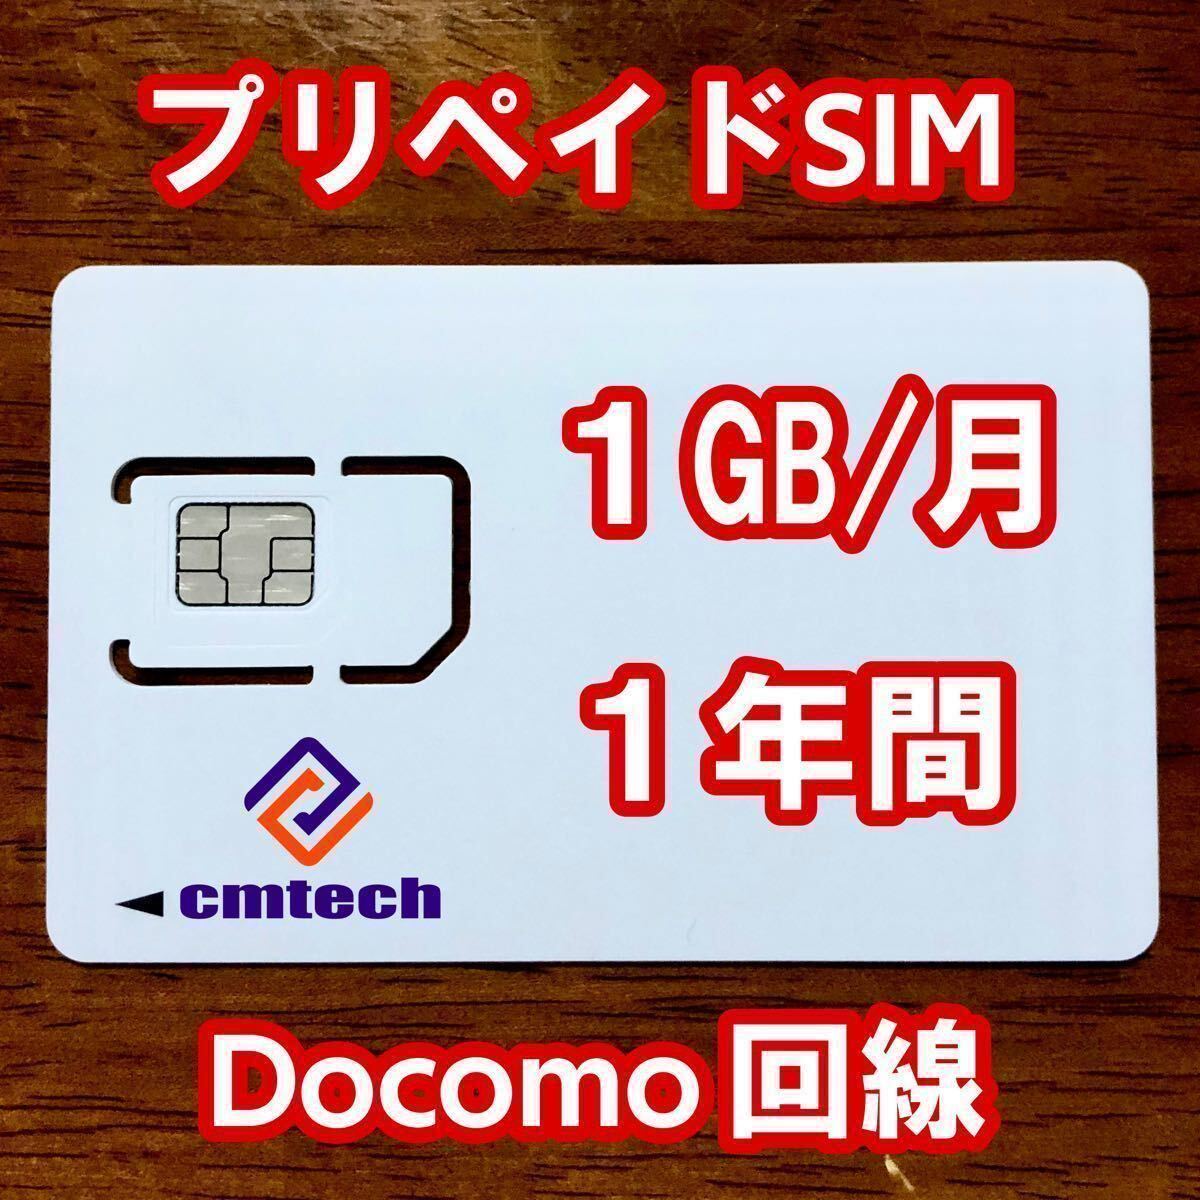 Docomo回線 プリペイドsim 1GB/月1年間有効 データ通信simカード11856_画像1